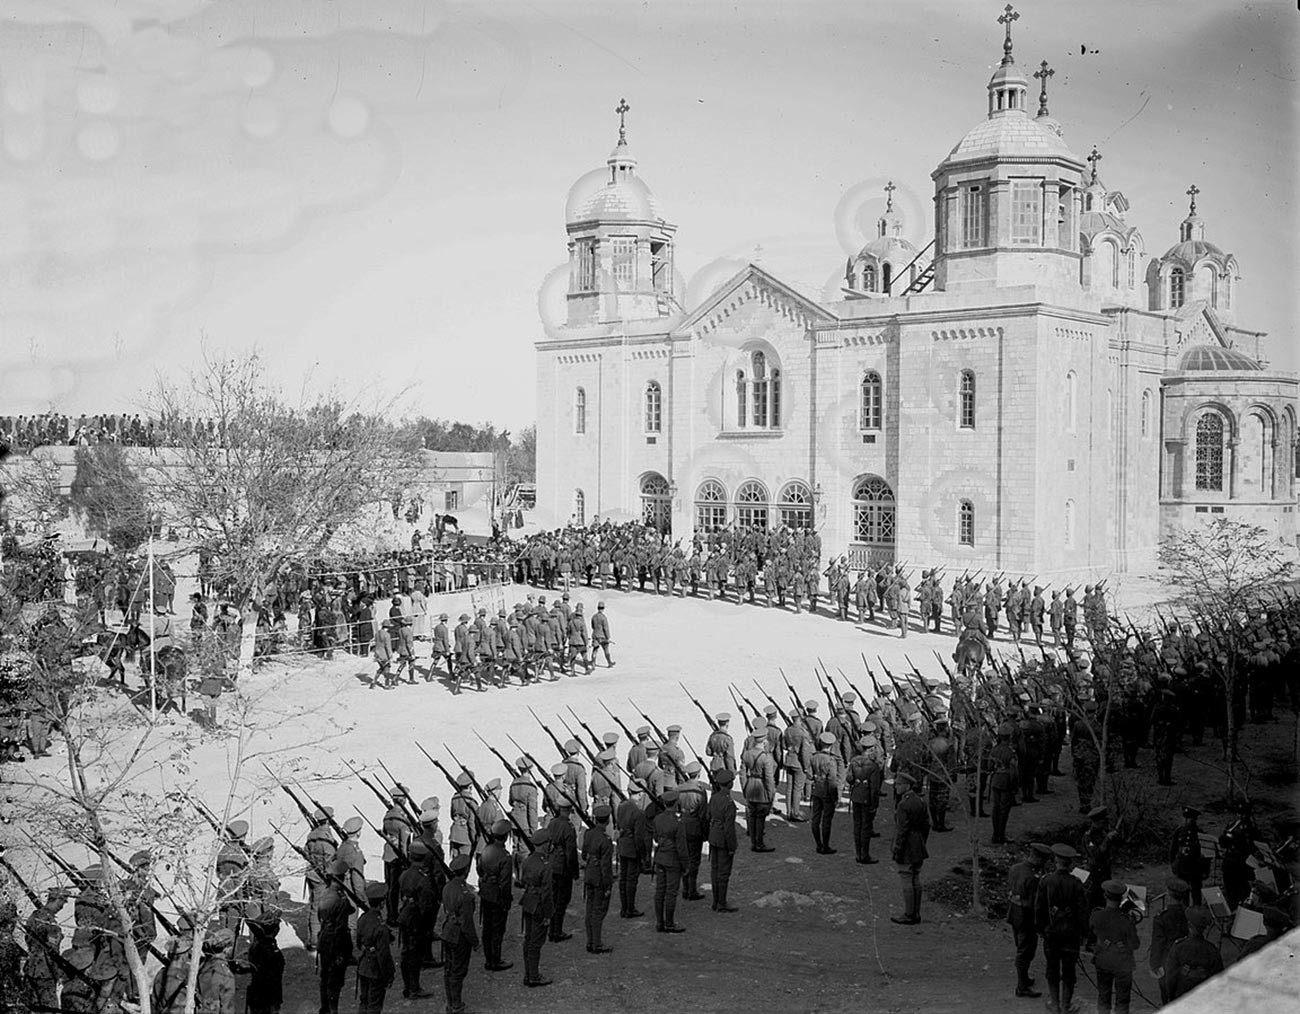 Marcha de Allenby no Complexo Russo, 1917